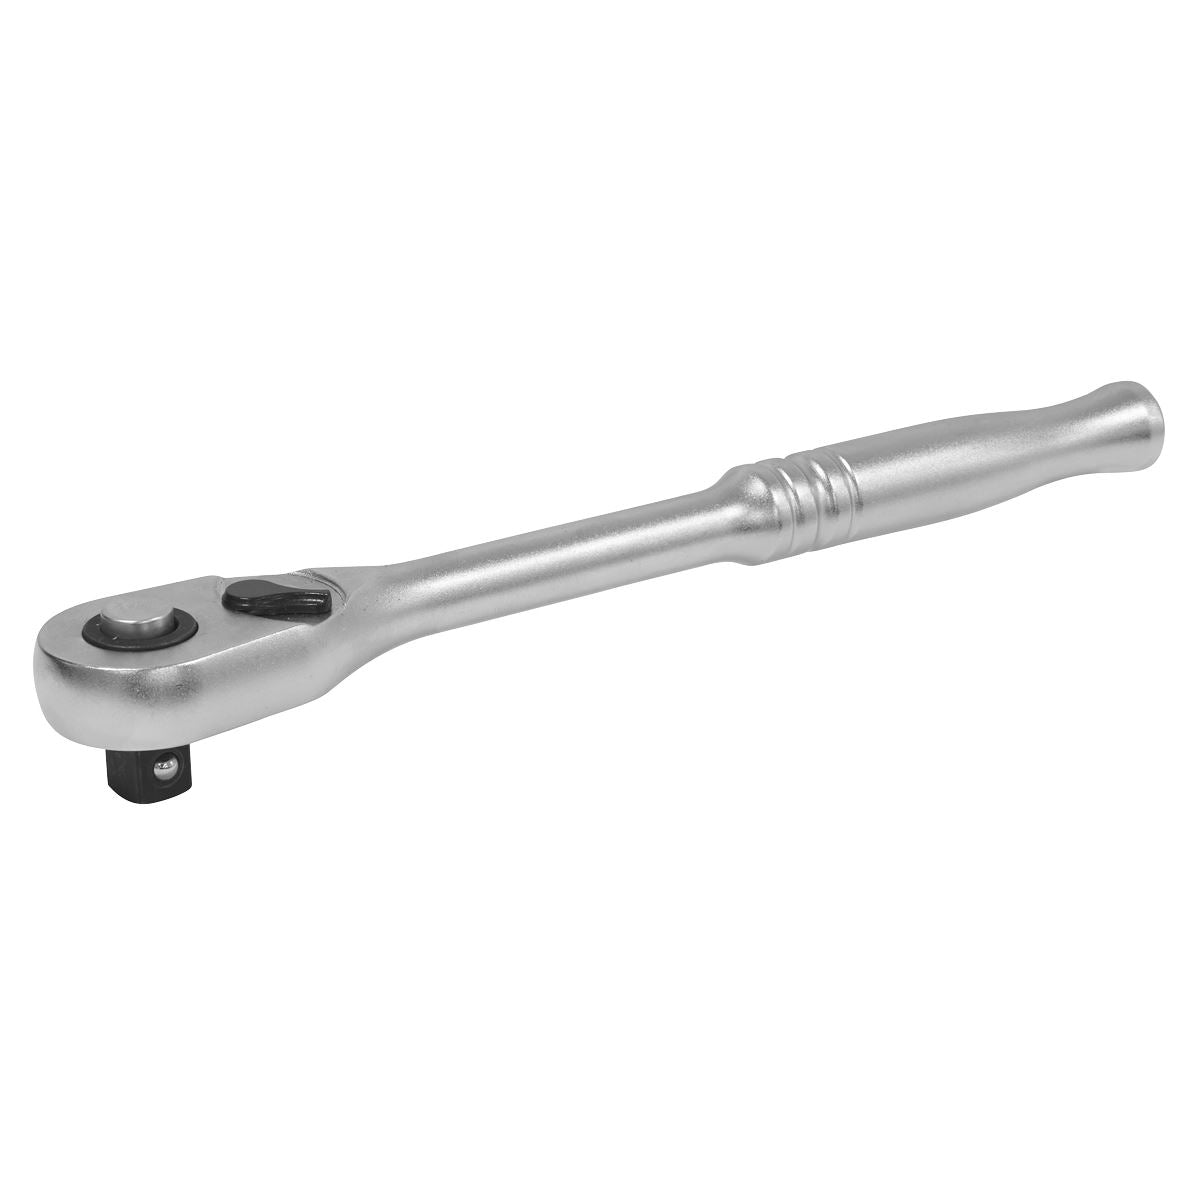 Sealey Premier Ratchet Wrench 3/8"Sq Drive 90-Tooth Flip Reverse - Premier Platinum Series